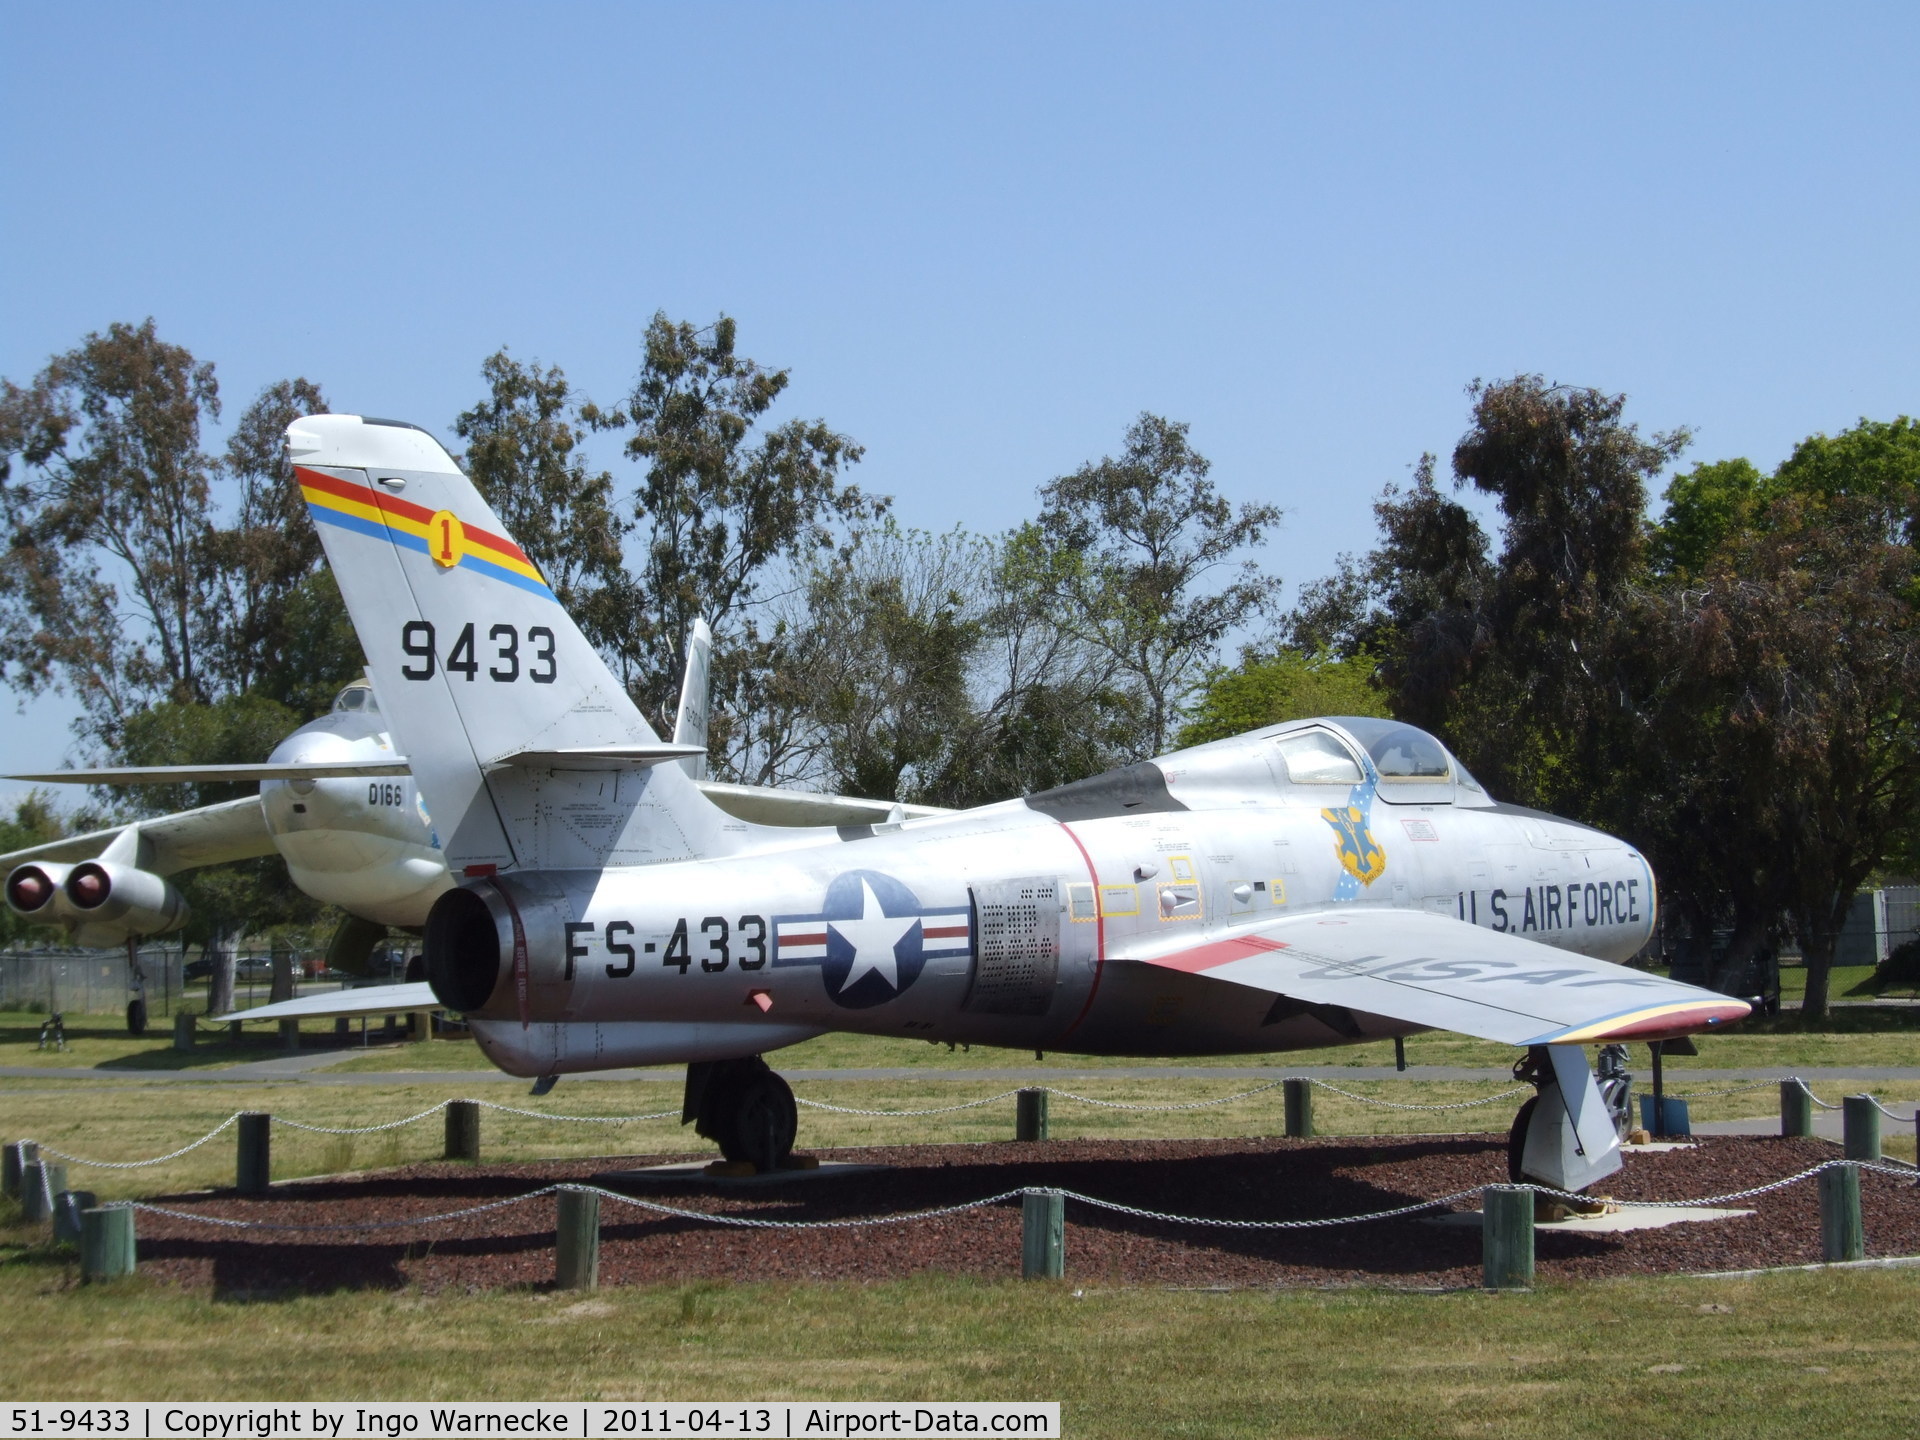 51-9433, 1951 General Motors F-84F Thunderstreak C/N Not found 51-9433, Republic F-84F Thunderstreak at the Castle Air Museum, Atwater CA